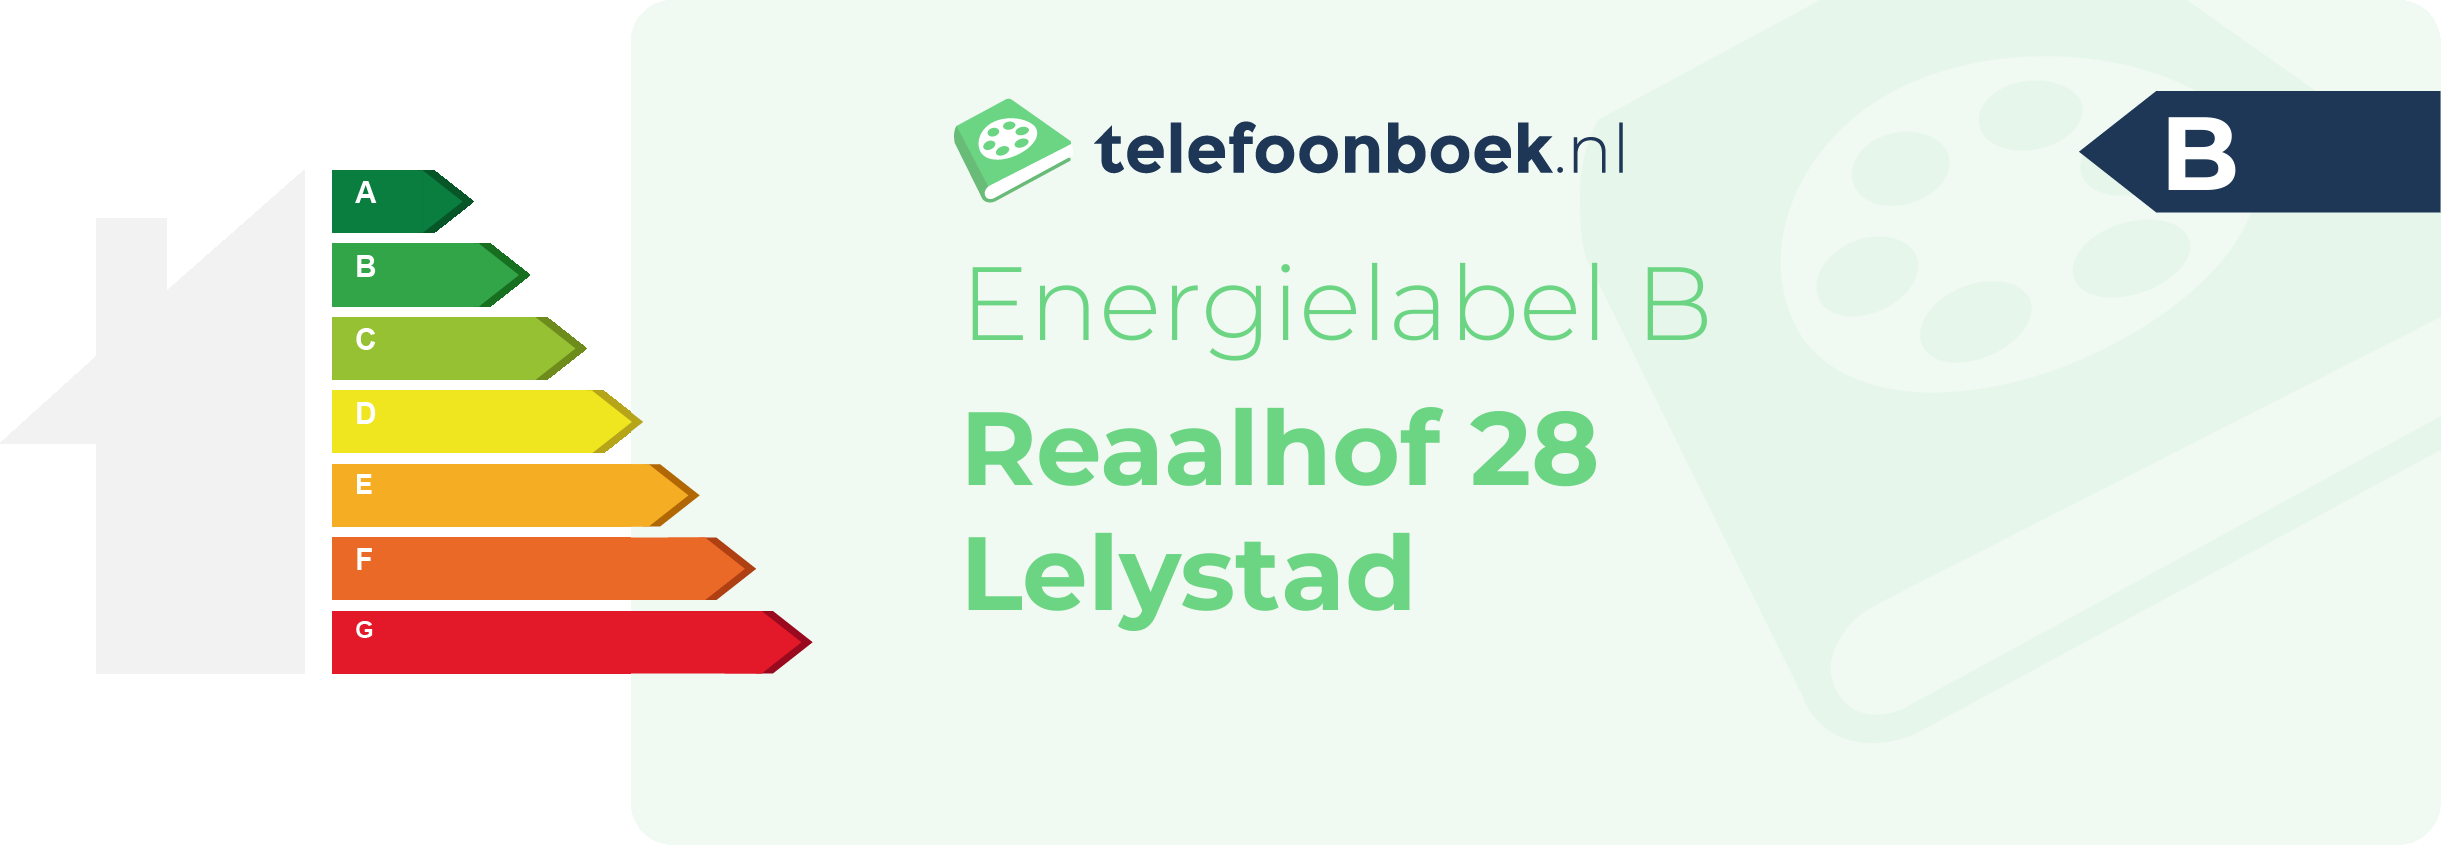 Energielabel Reaalhof 28 Lelystad